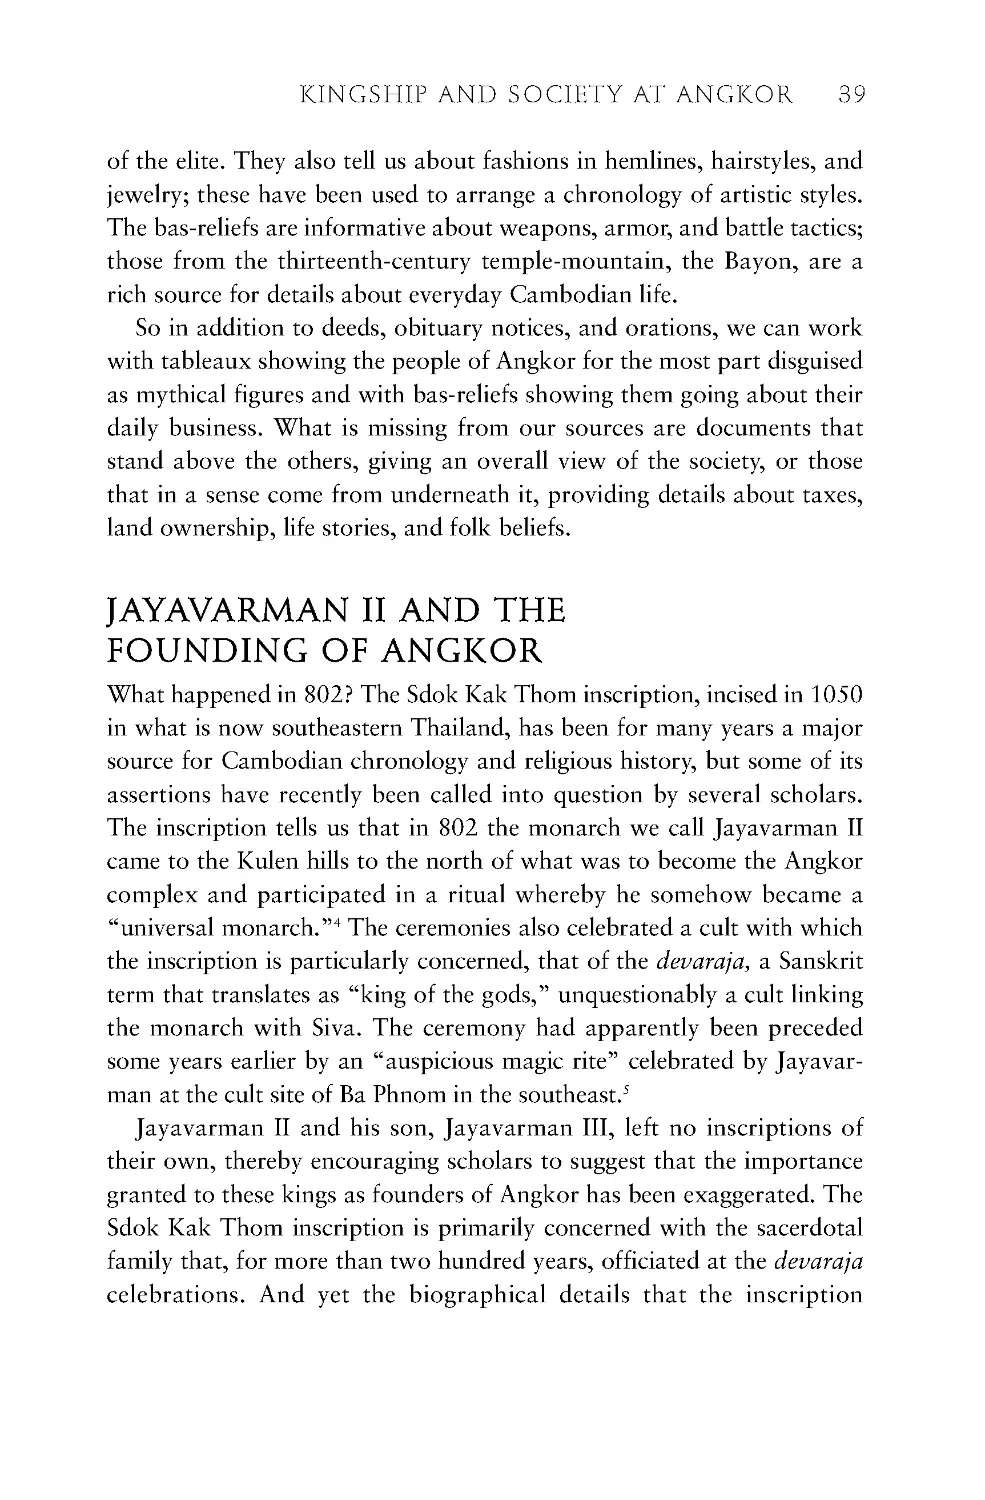 Jayavarmani II and the Founding of Angkor